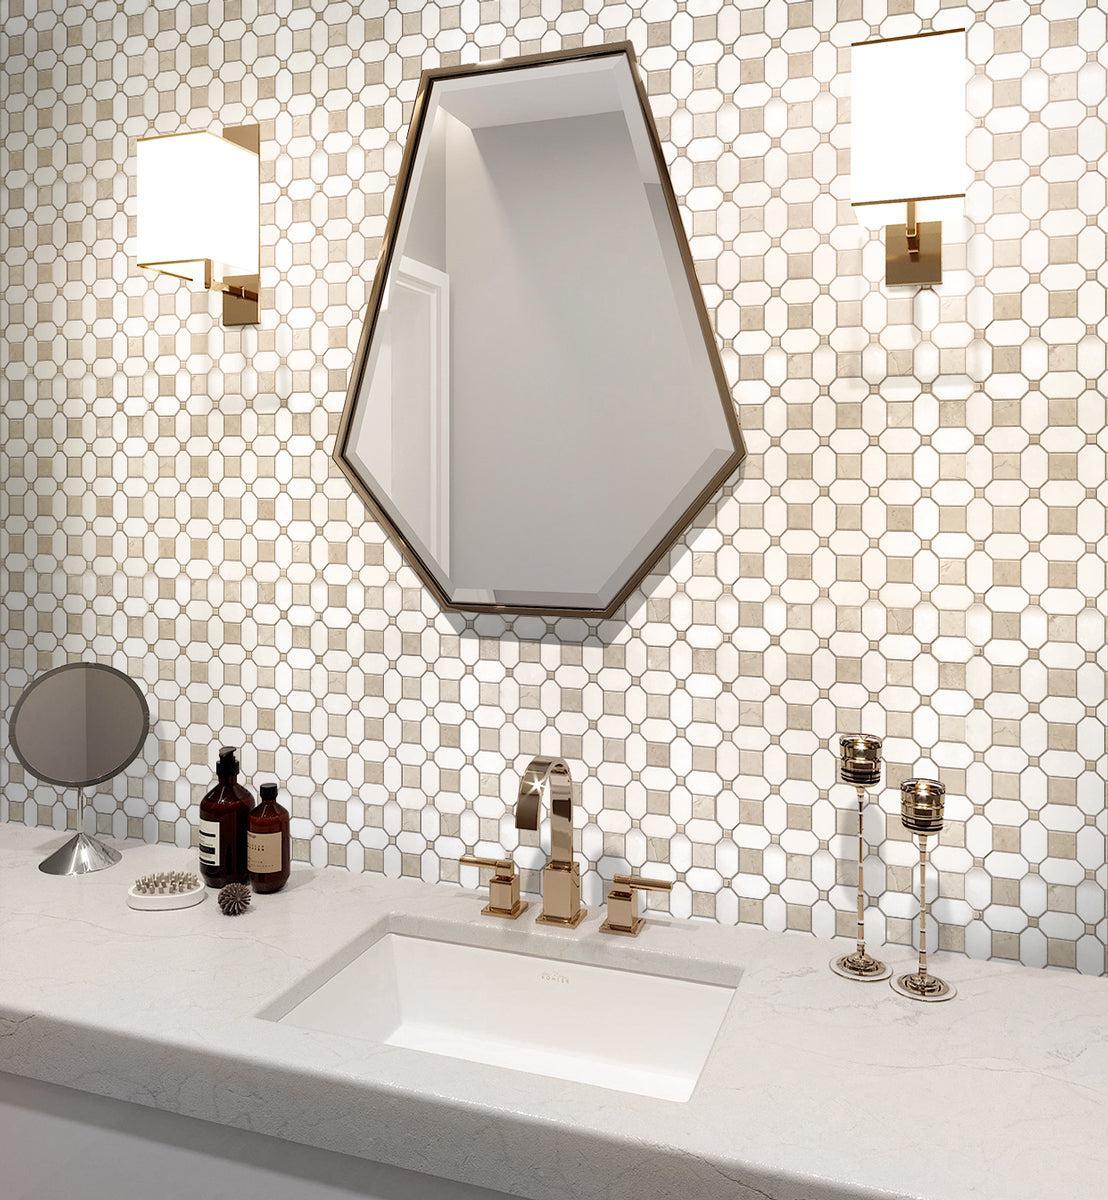 Crema Marfil Square And Thassos Octagon Marble Mosaic Tile Bathroom Backsplash